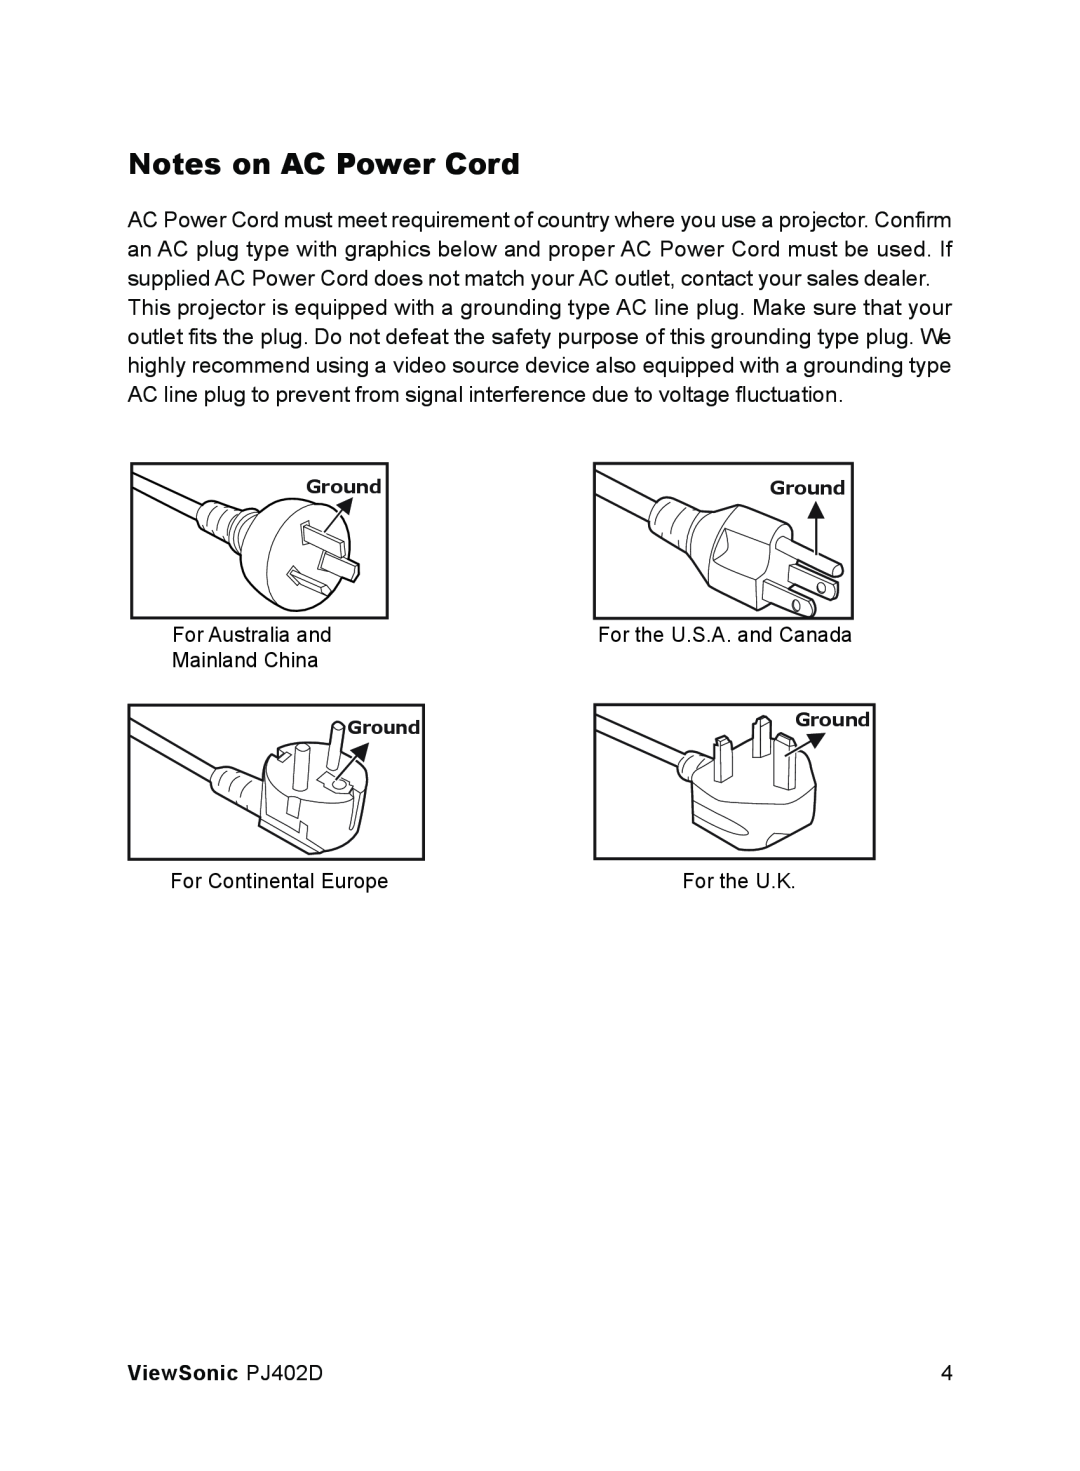 ViewSonic PJ402D manual Notes on AC Power Cord 